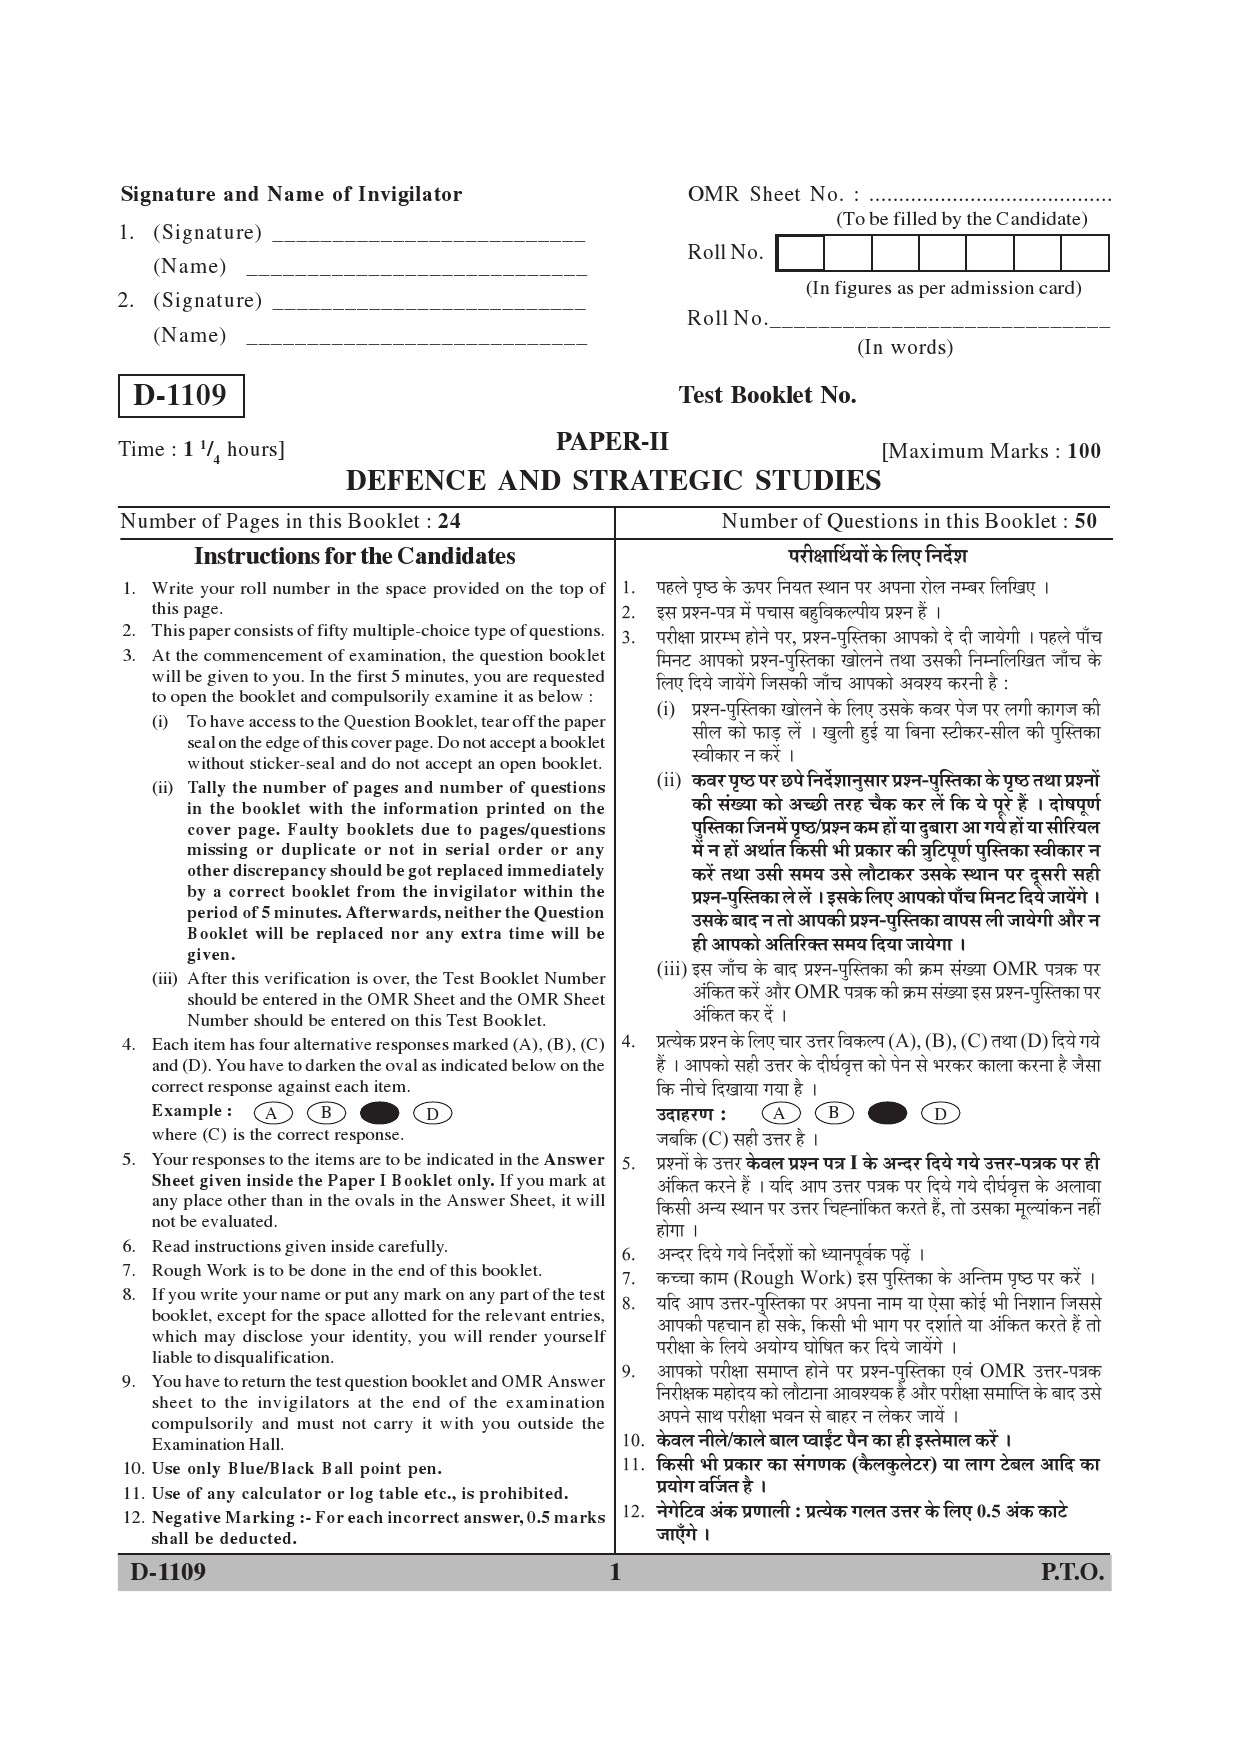 UGC NET Defence and Strategic Studies Question Paper II December 2009 1